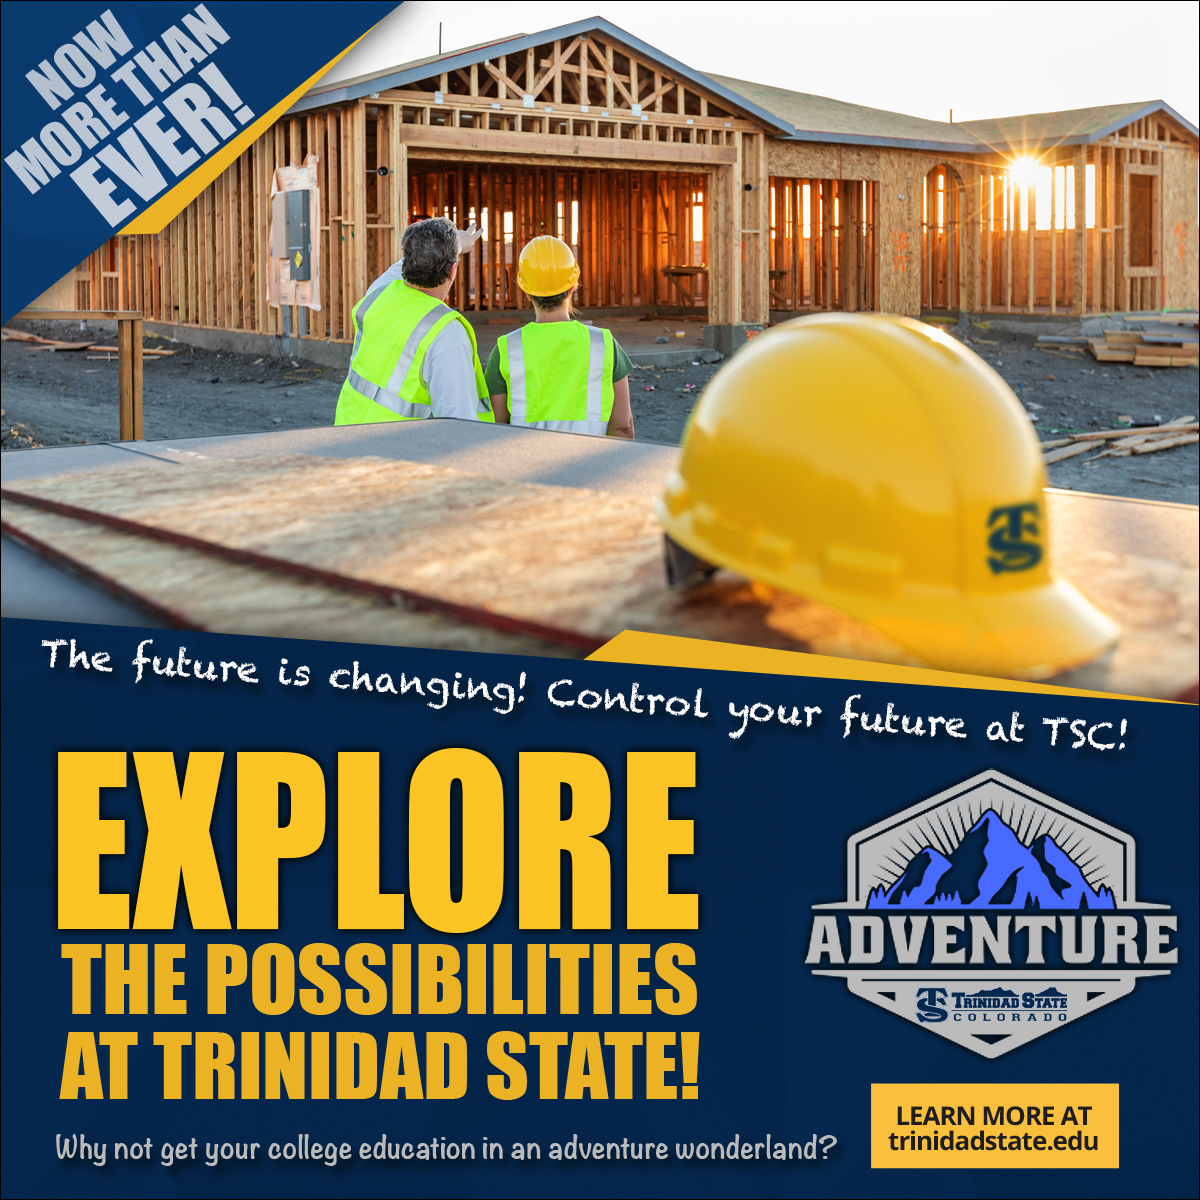 Trinidad State Construction image